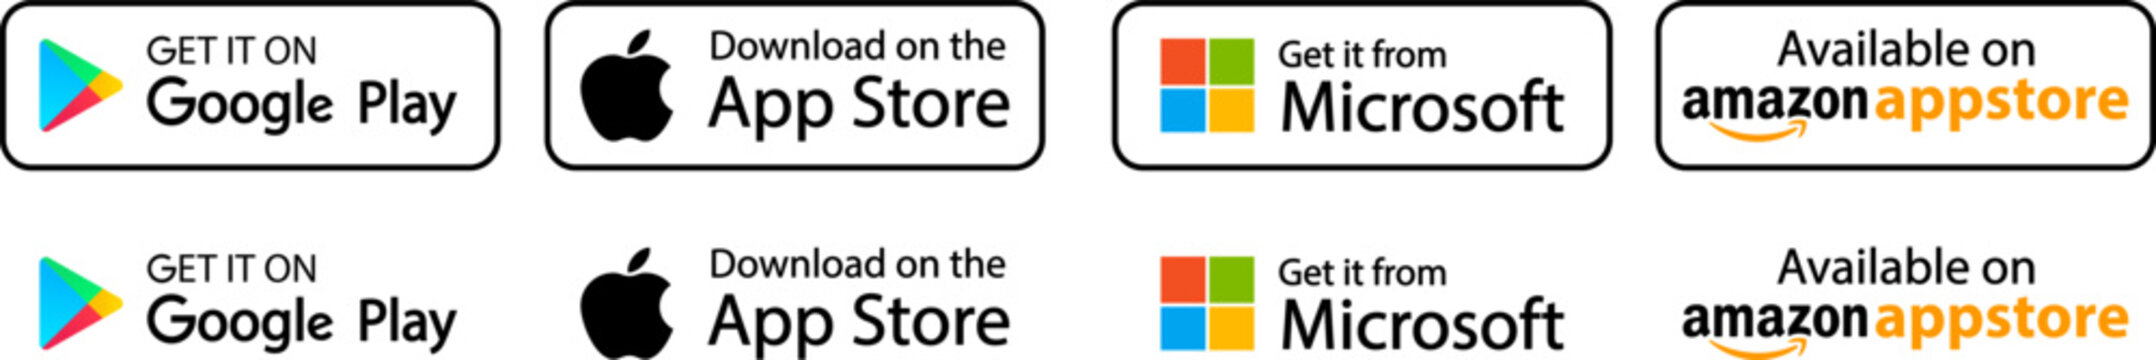 Google Play , App Store , Microsoft store,Amazon appstore logo.
